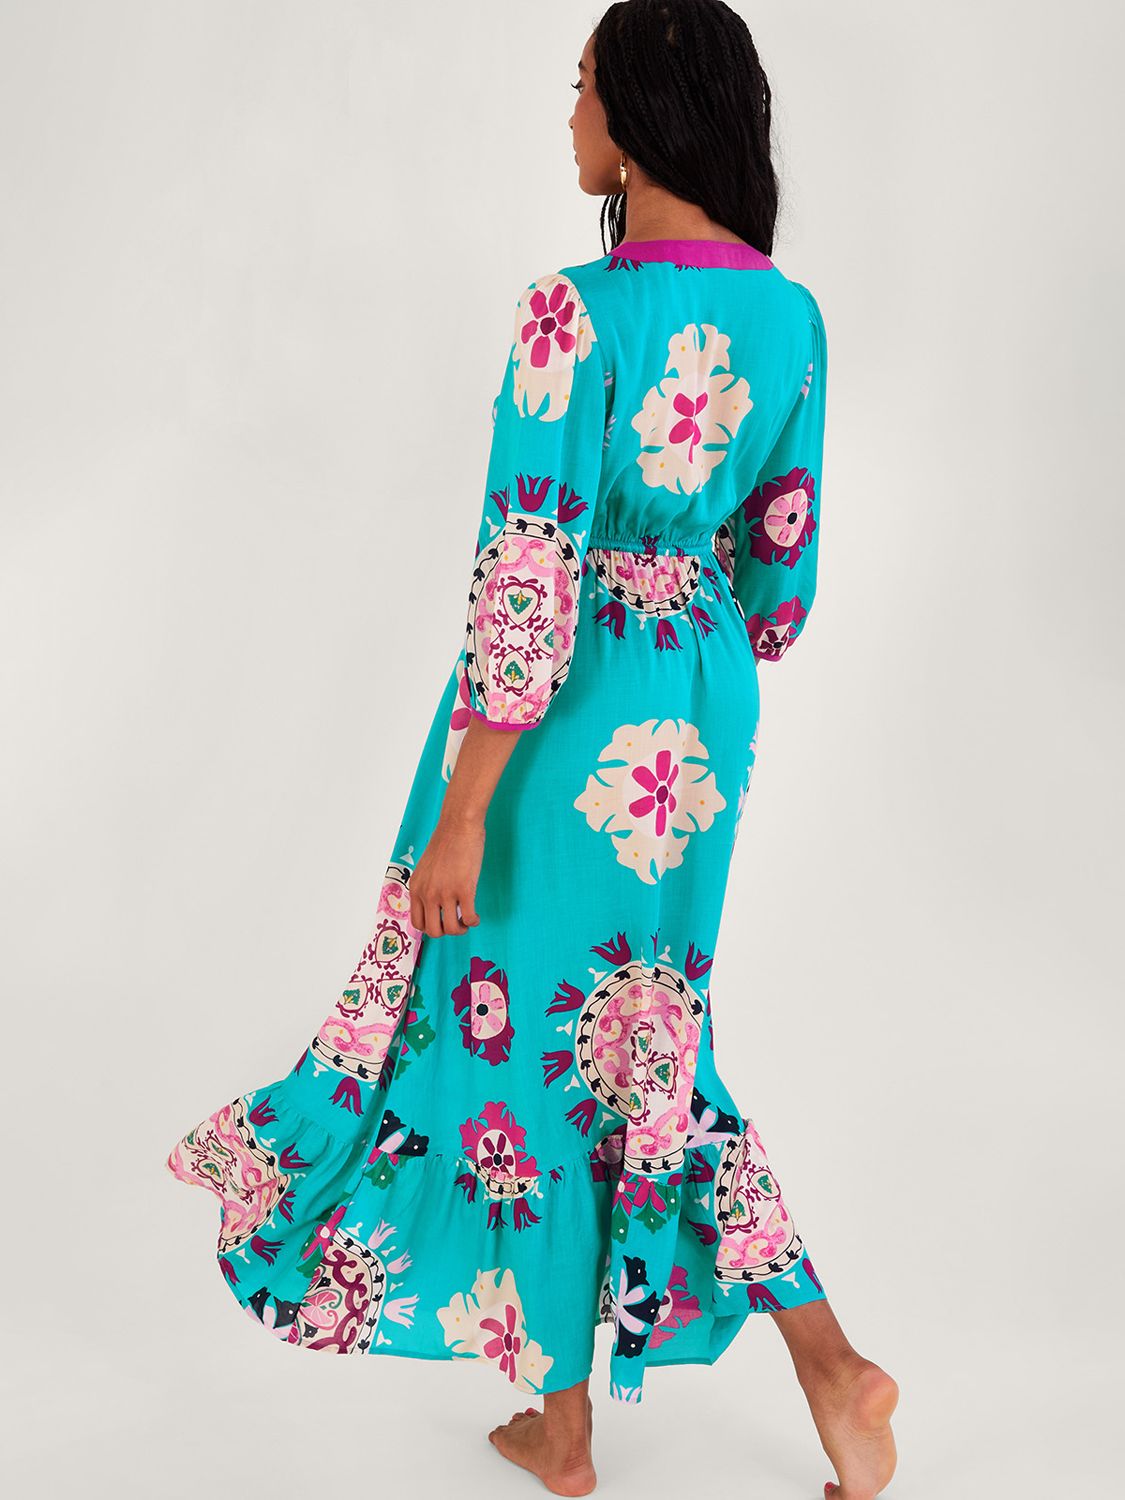 Monsoon Bonita Geometric Print Dress, Turquoise, S